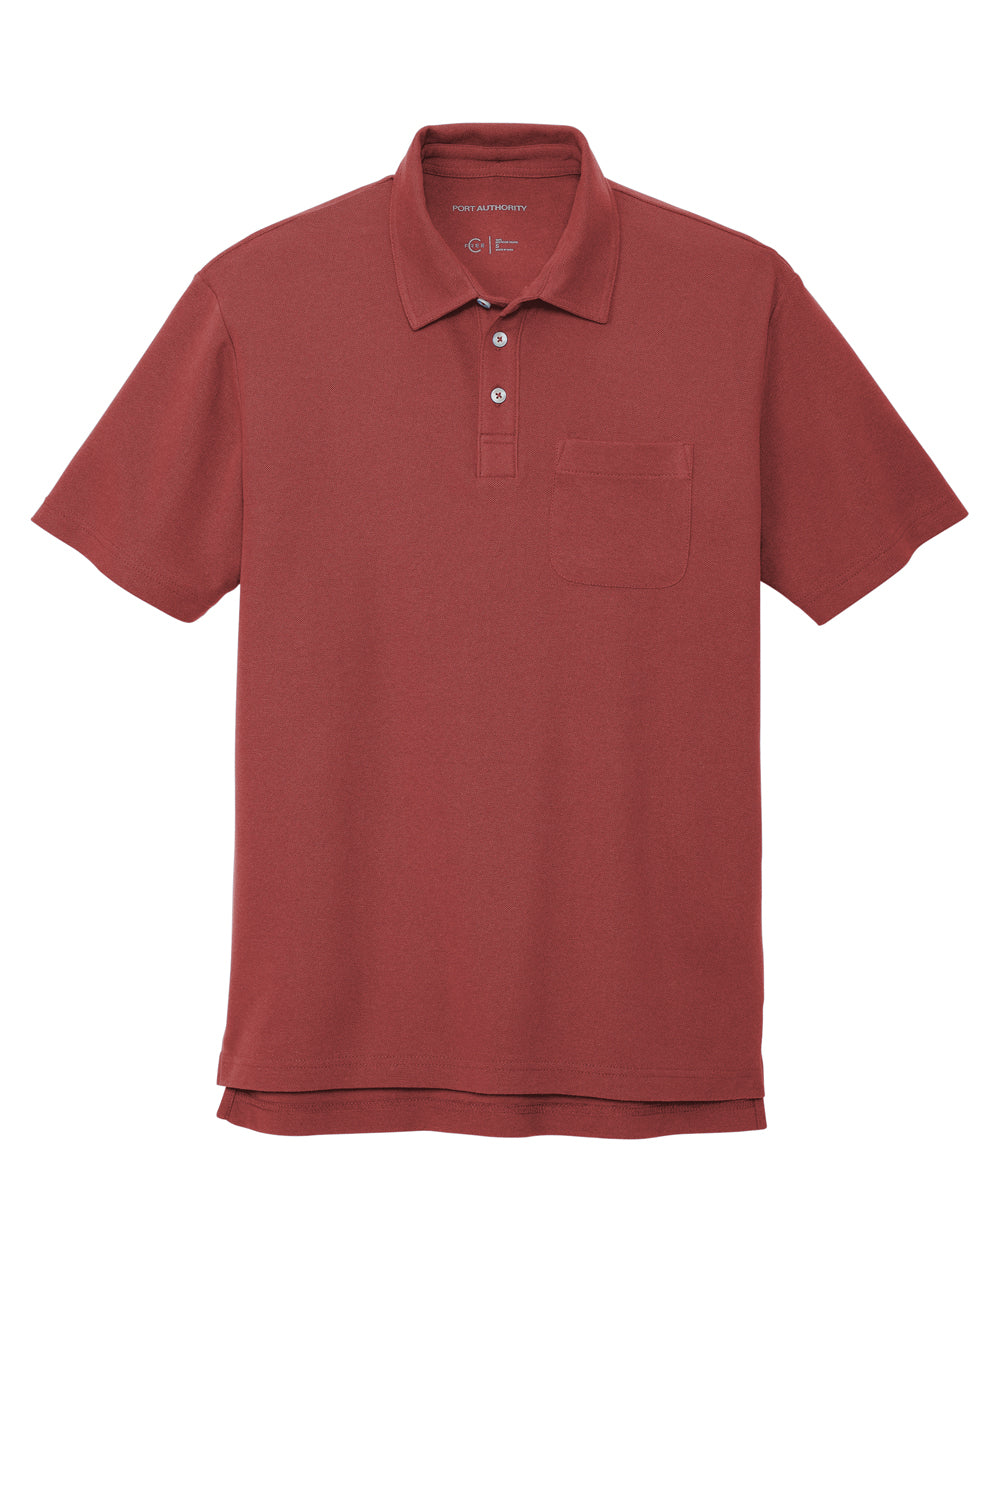 Port Authority K868 Mens C-FREE Pique Short Sleeve Polo Shirt w/ Pocket Garnet Red Flat Front